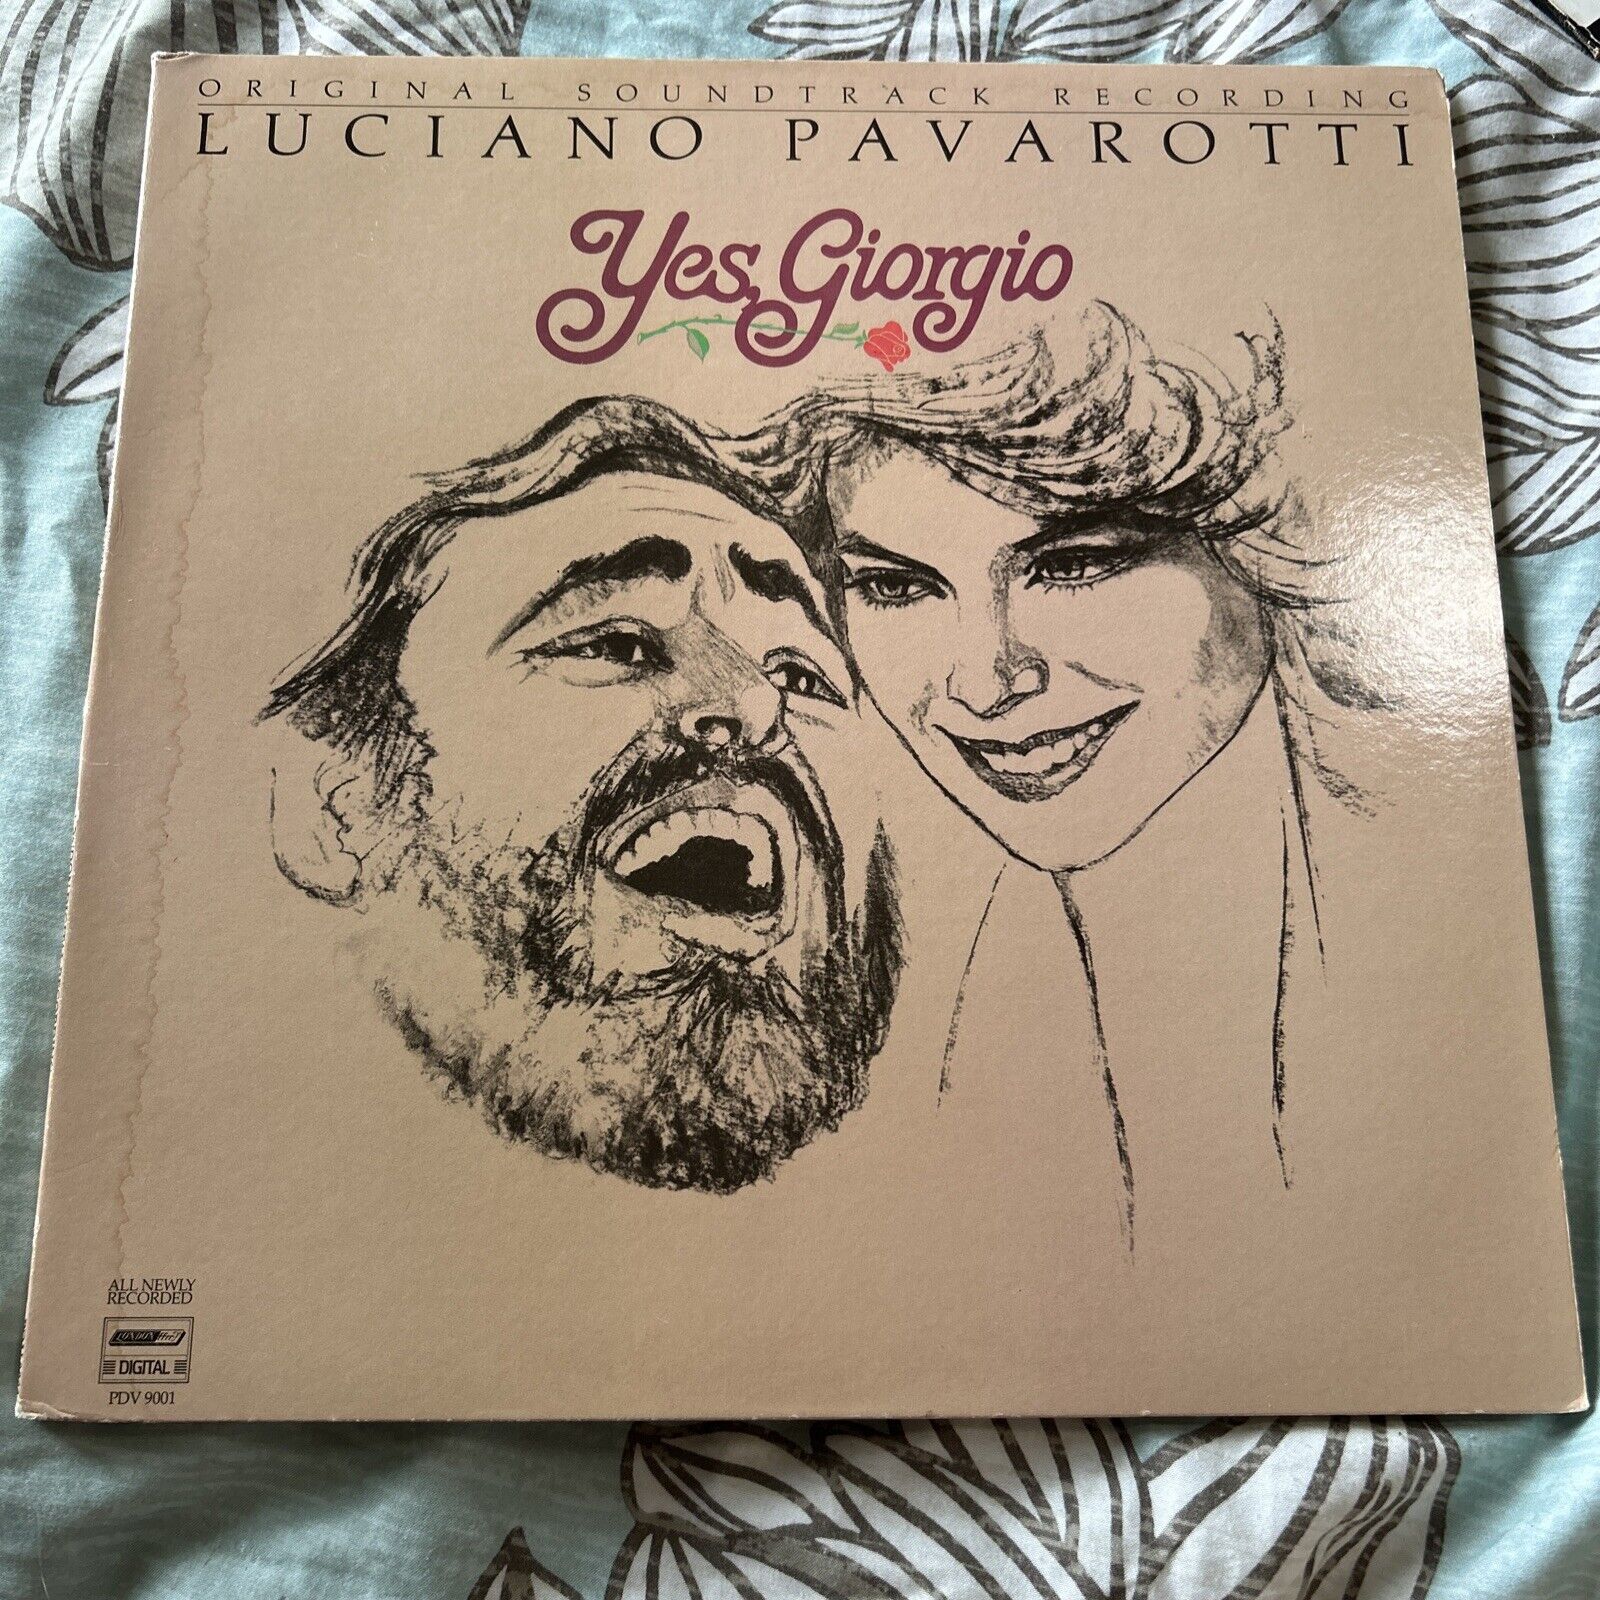 Luciano Pavarotti “Yes, Giorgio” Vinyl Record PDV 9001